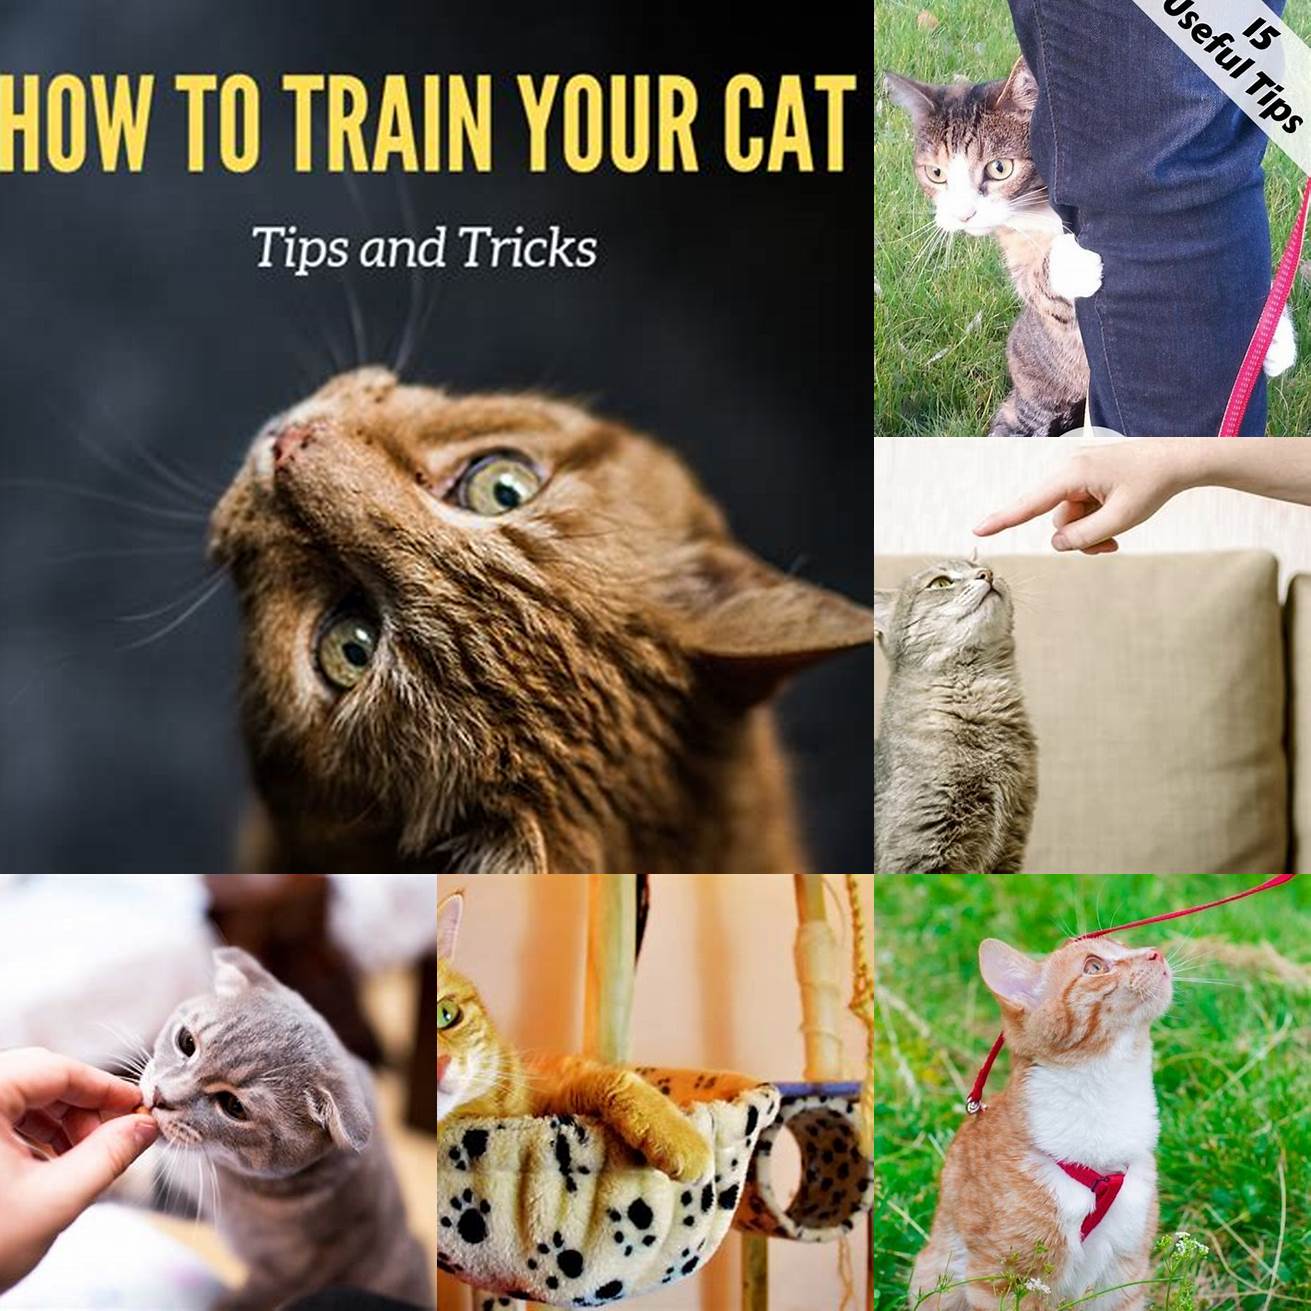 Train Your Cat